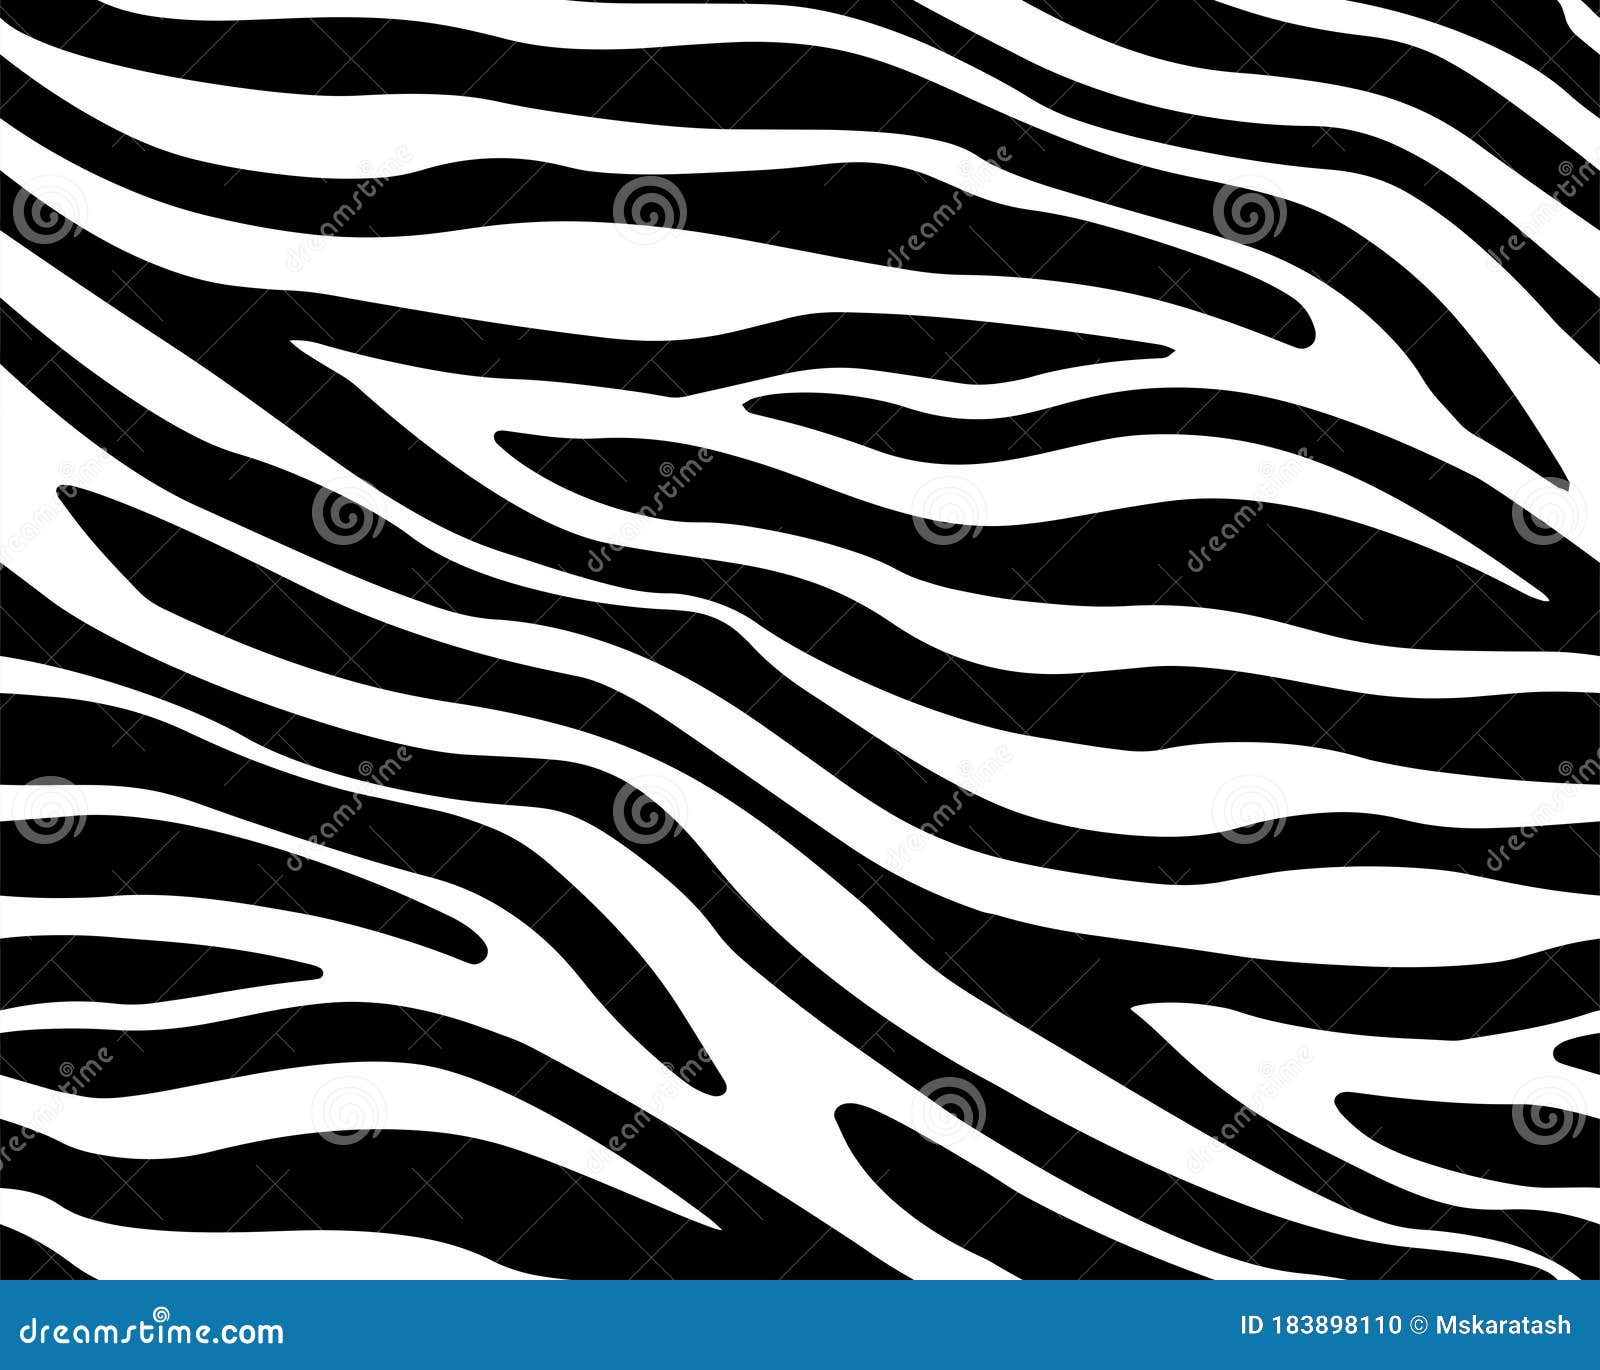 Rasch Zebra Print Themed Wallpaper High Quality Textured Vinyl Animal Theme   eBay